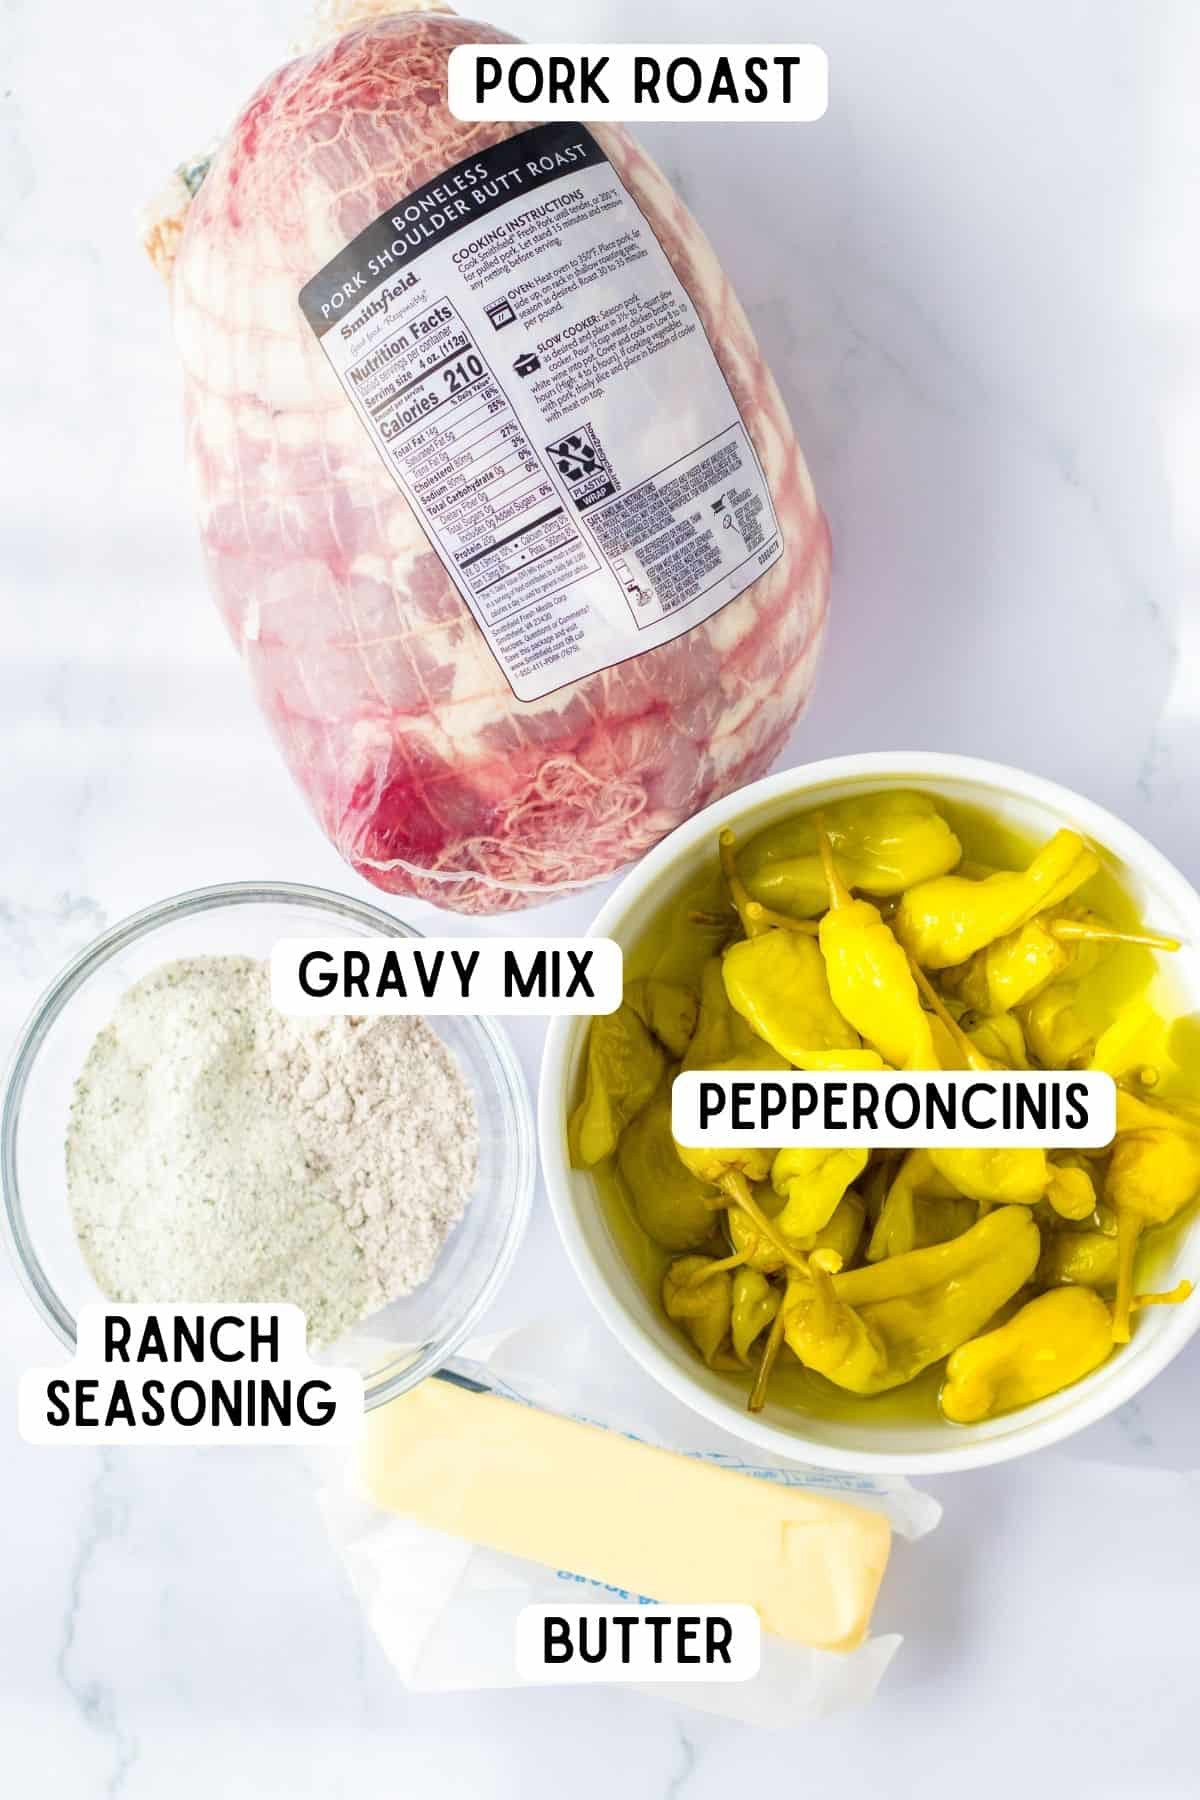 Ingredients for Mississippi Pork Roast: pork shoulder butt, pepperoncini peppers, stick of butter, ranch seasoning, and gravy mix.